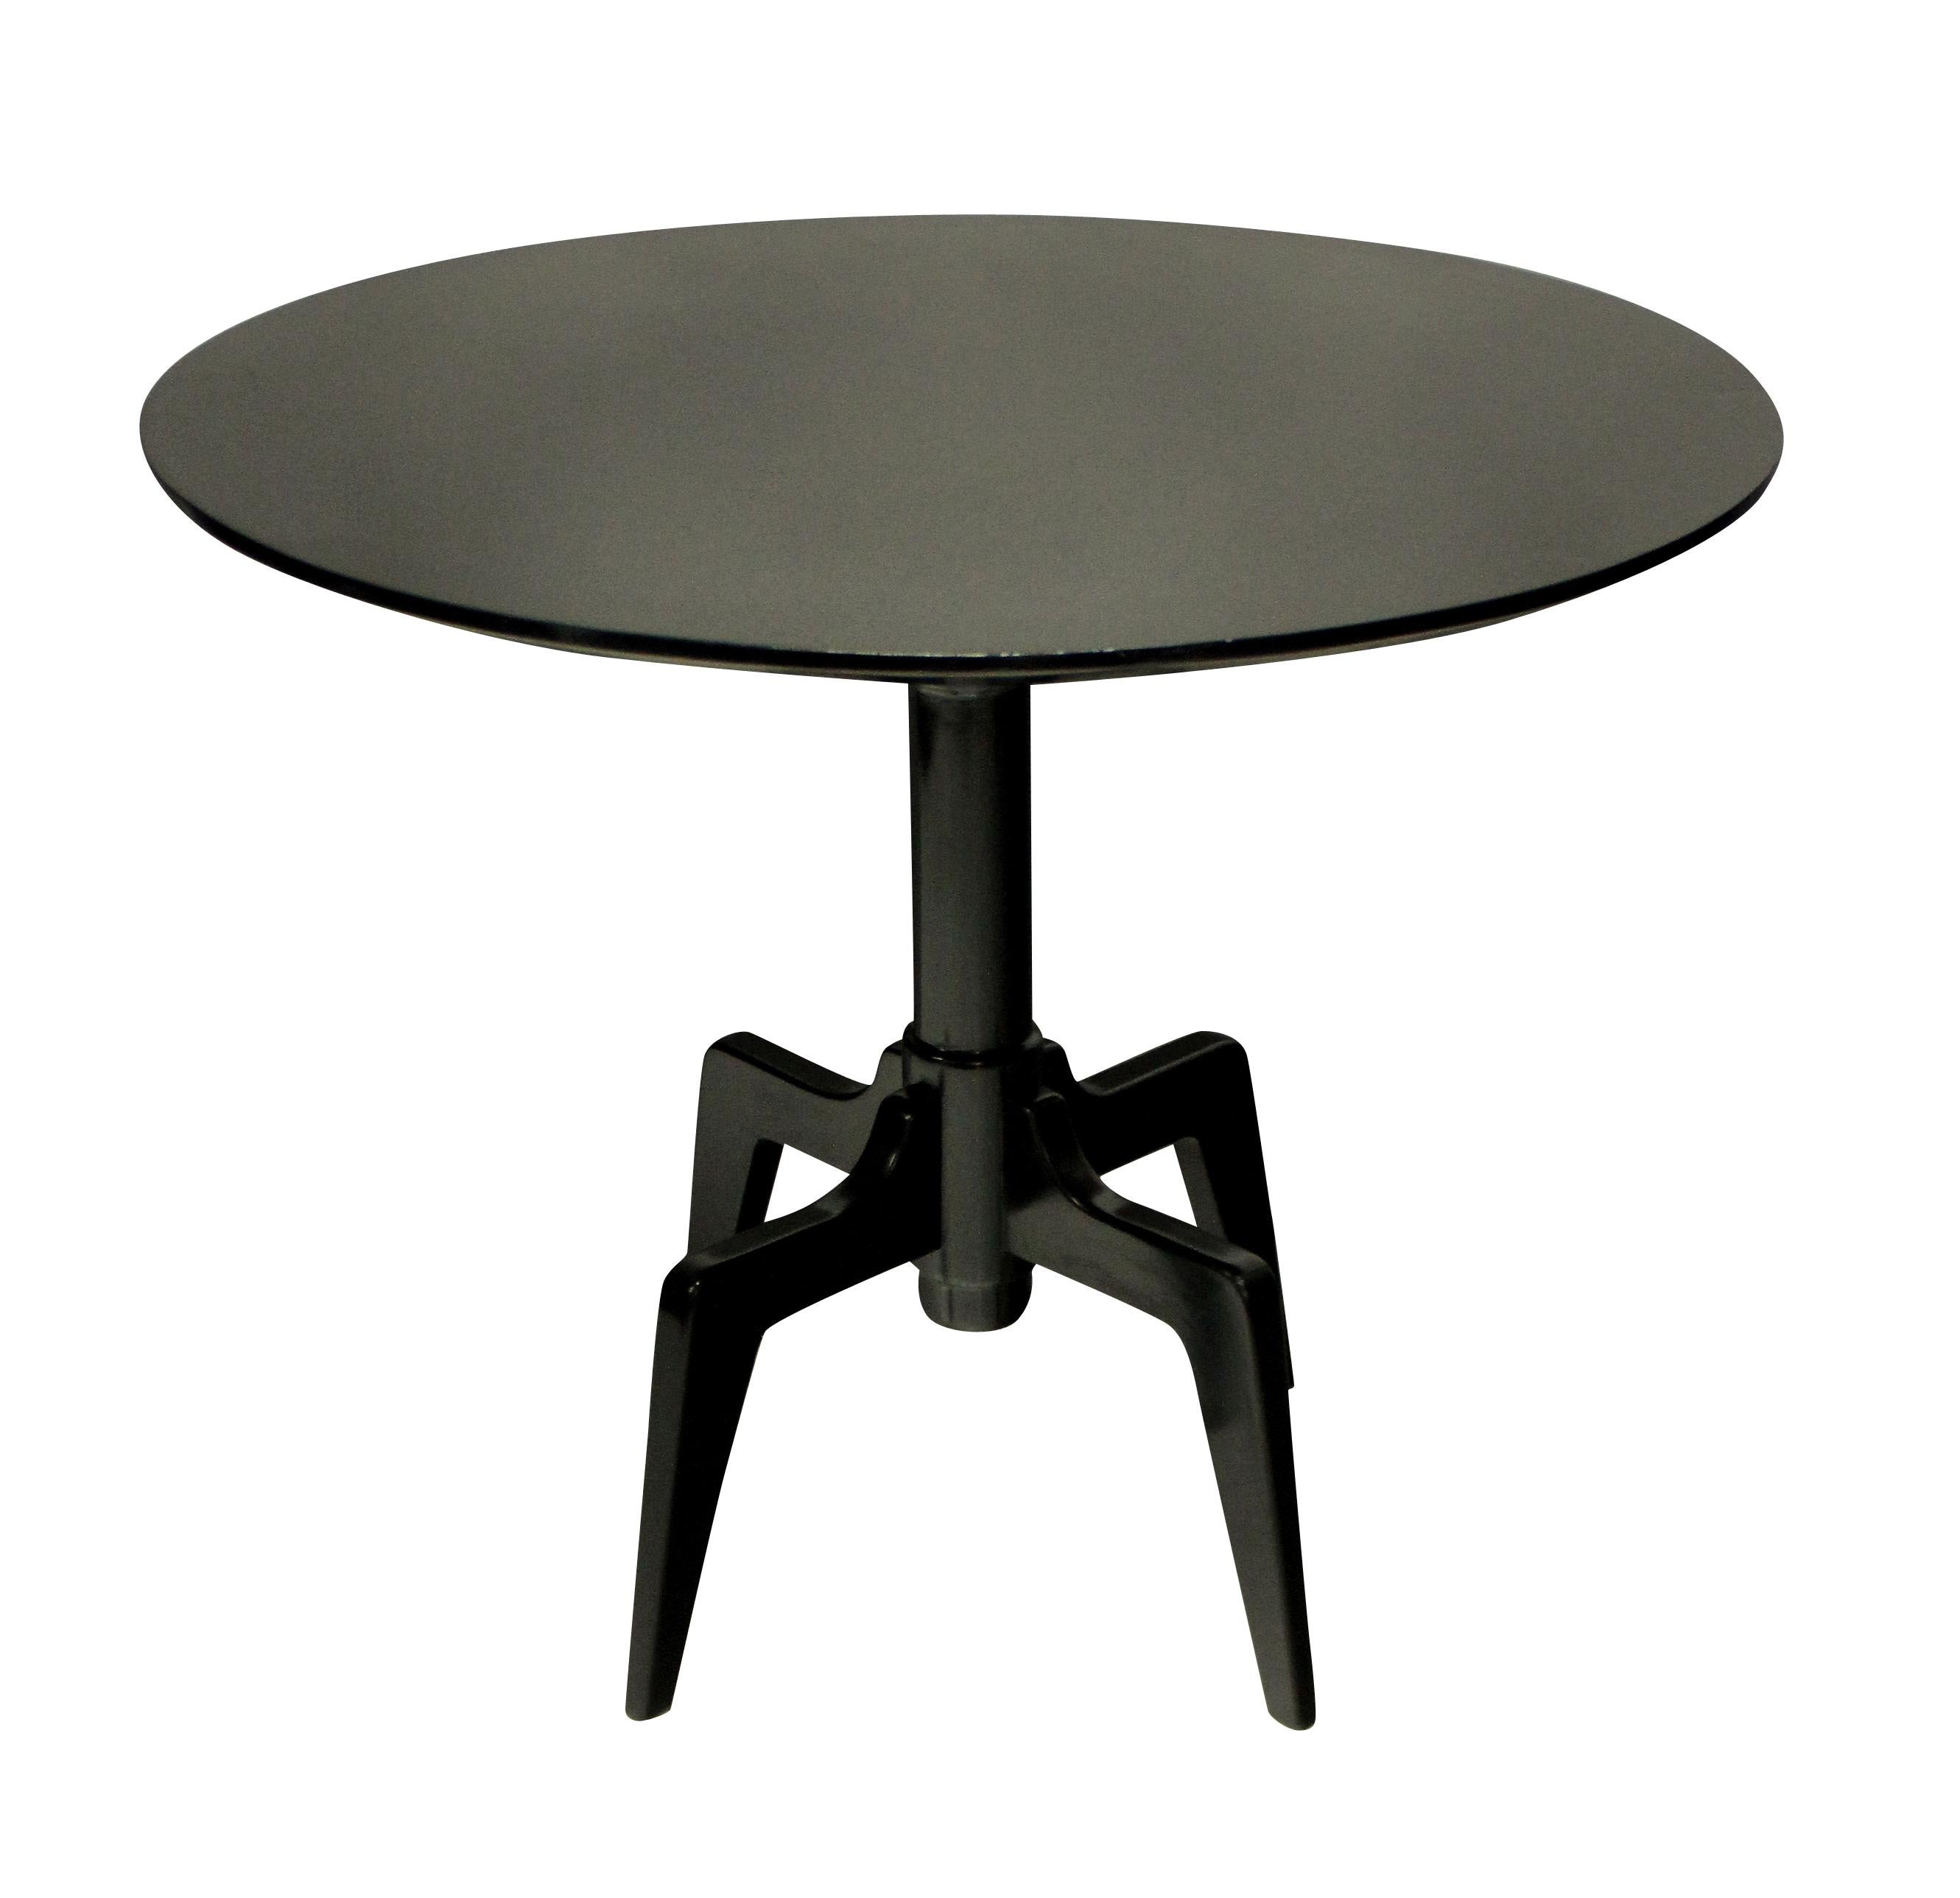 An unusual Italian midcentury, ebonized cherrywood centre table on raised articulated legs.